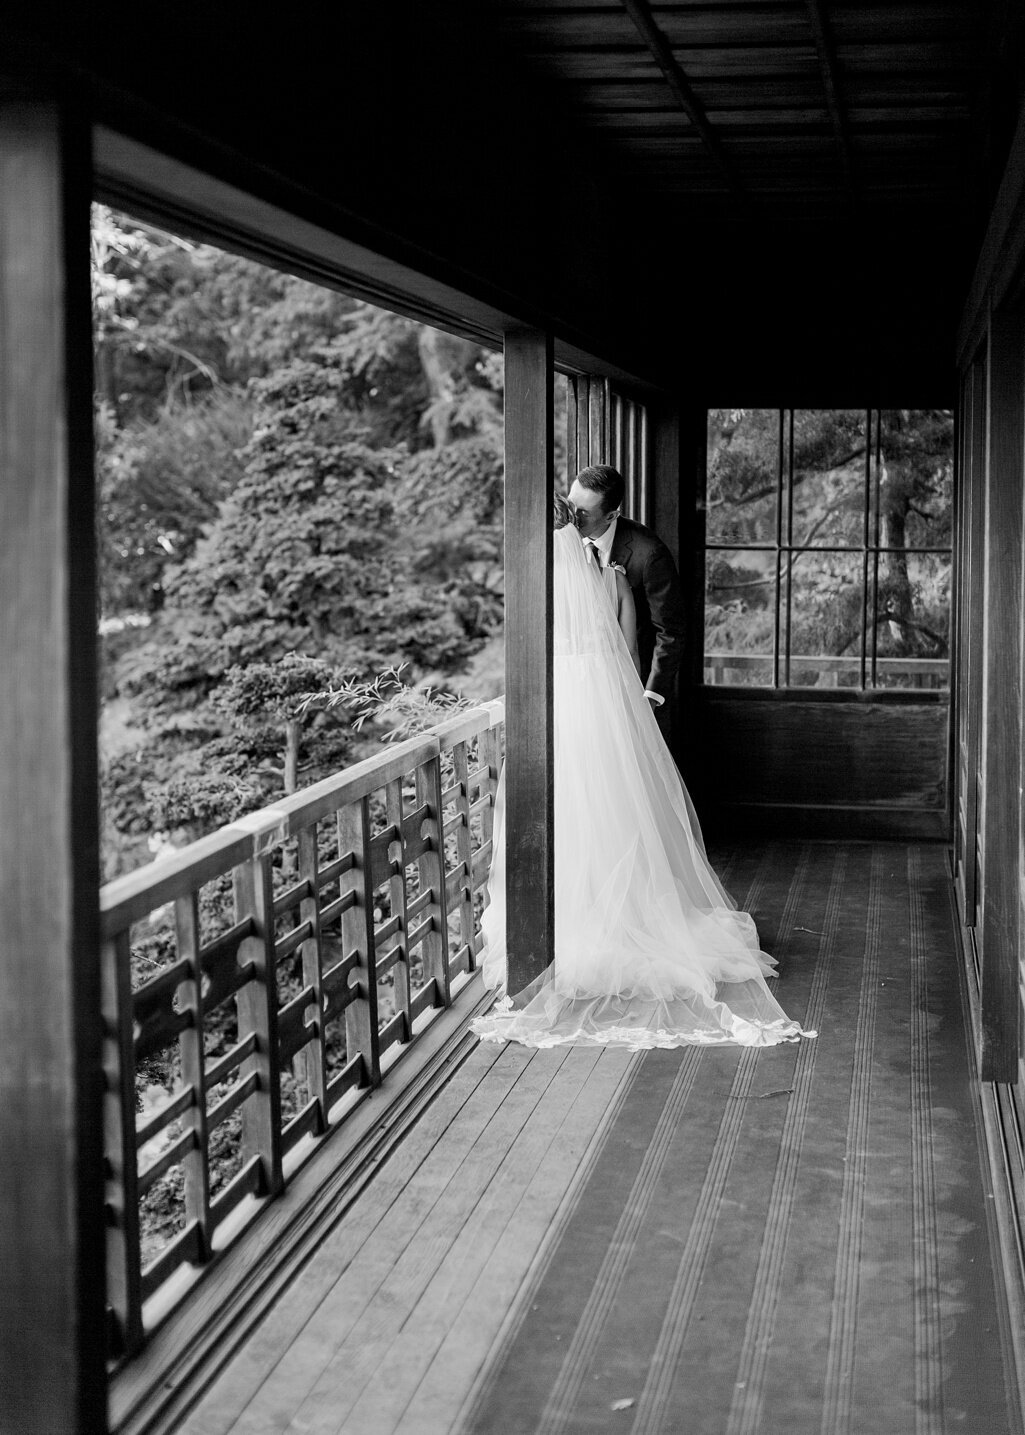 Jessie-Barksdale-Photography_Hakone-Gardens-Saratoga_San-Francisco-Bay-Area-Wedding-Photographer_0031